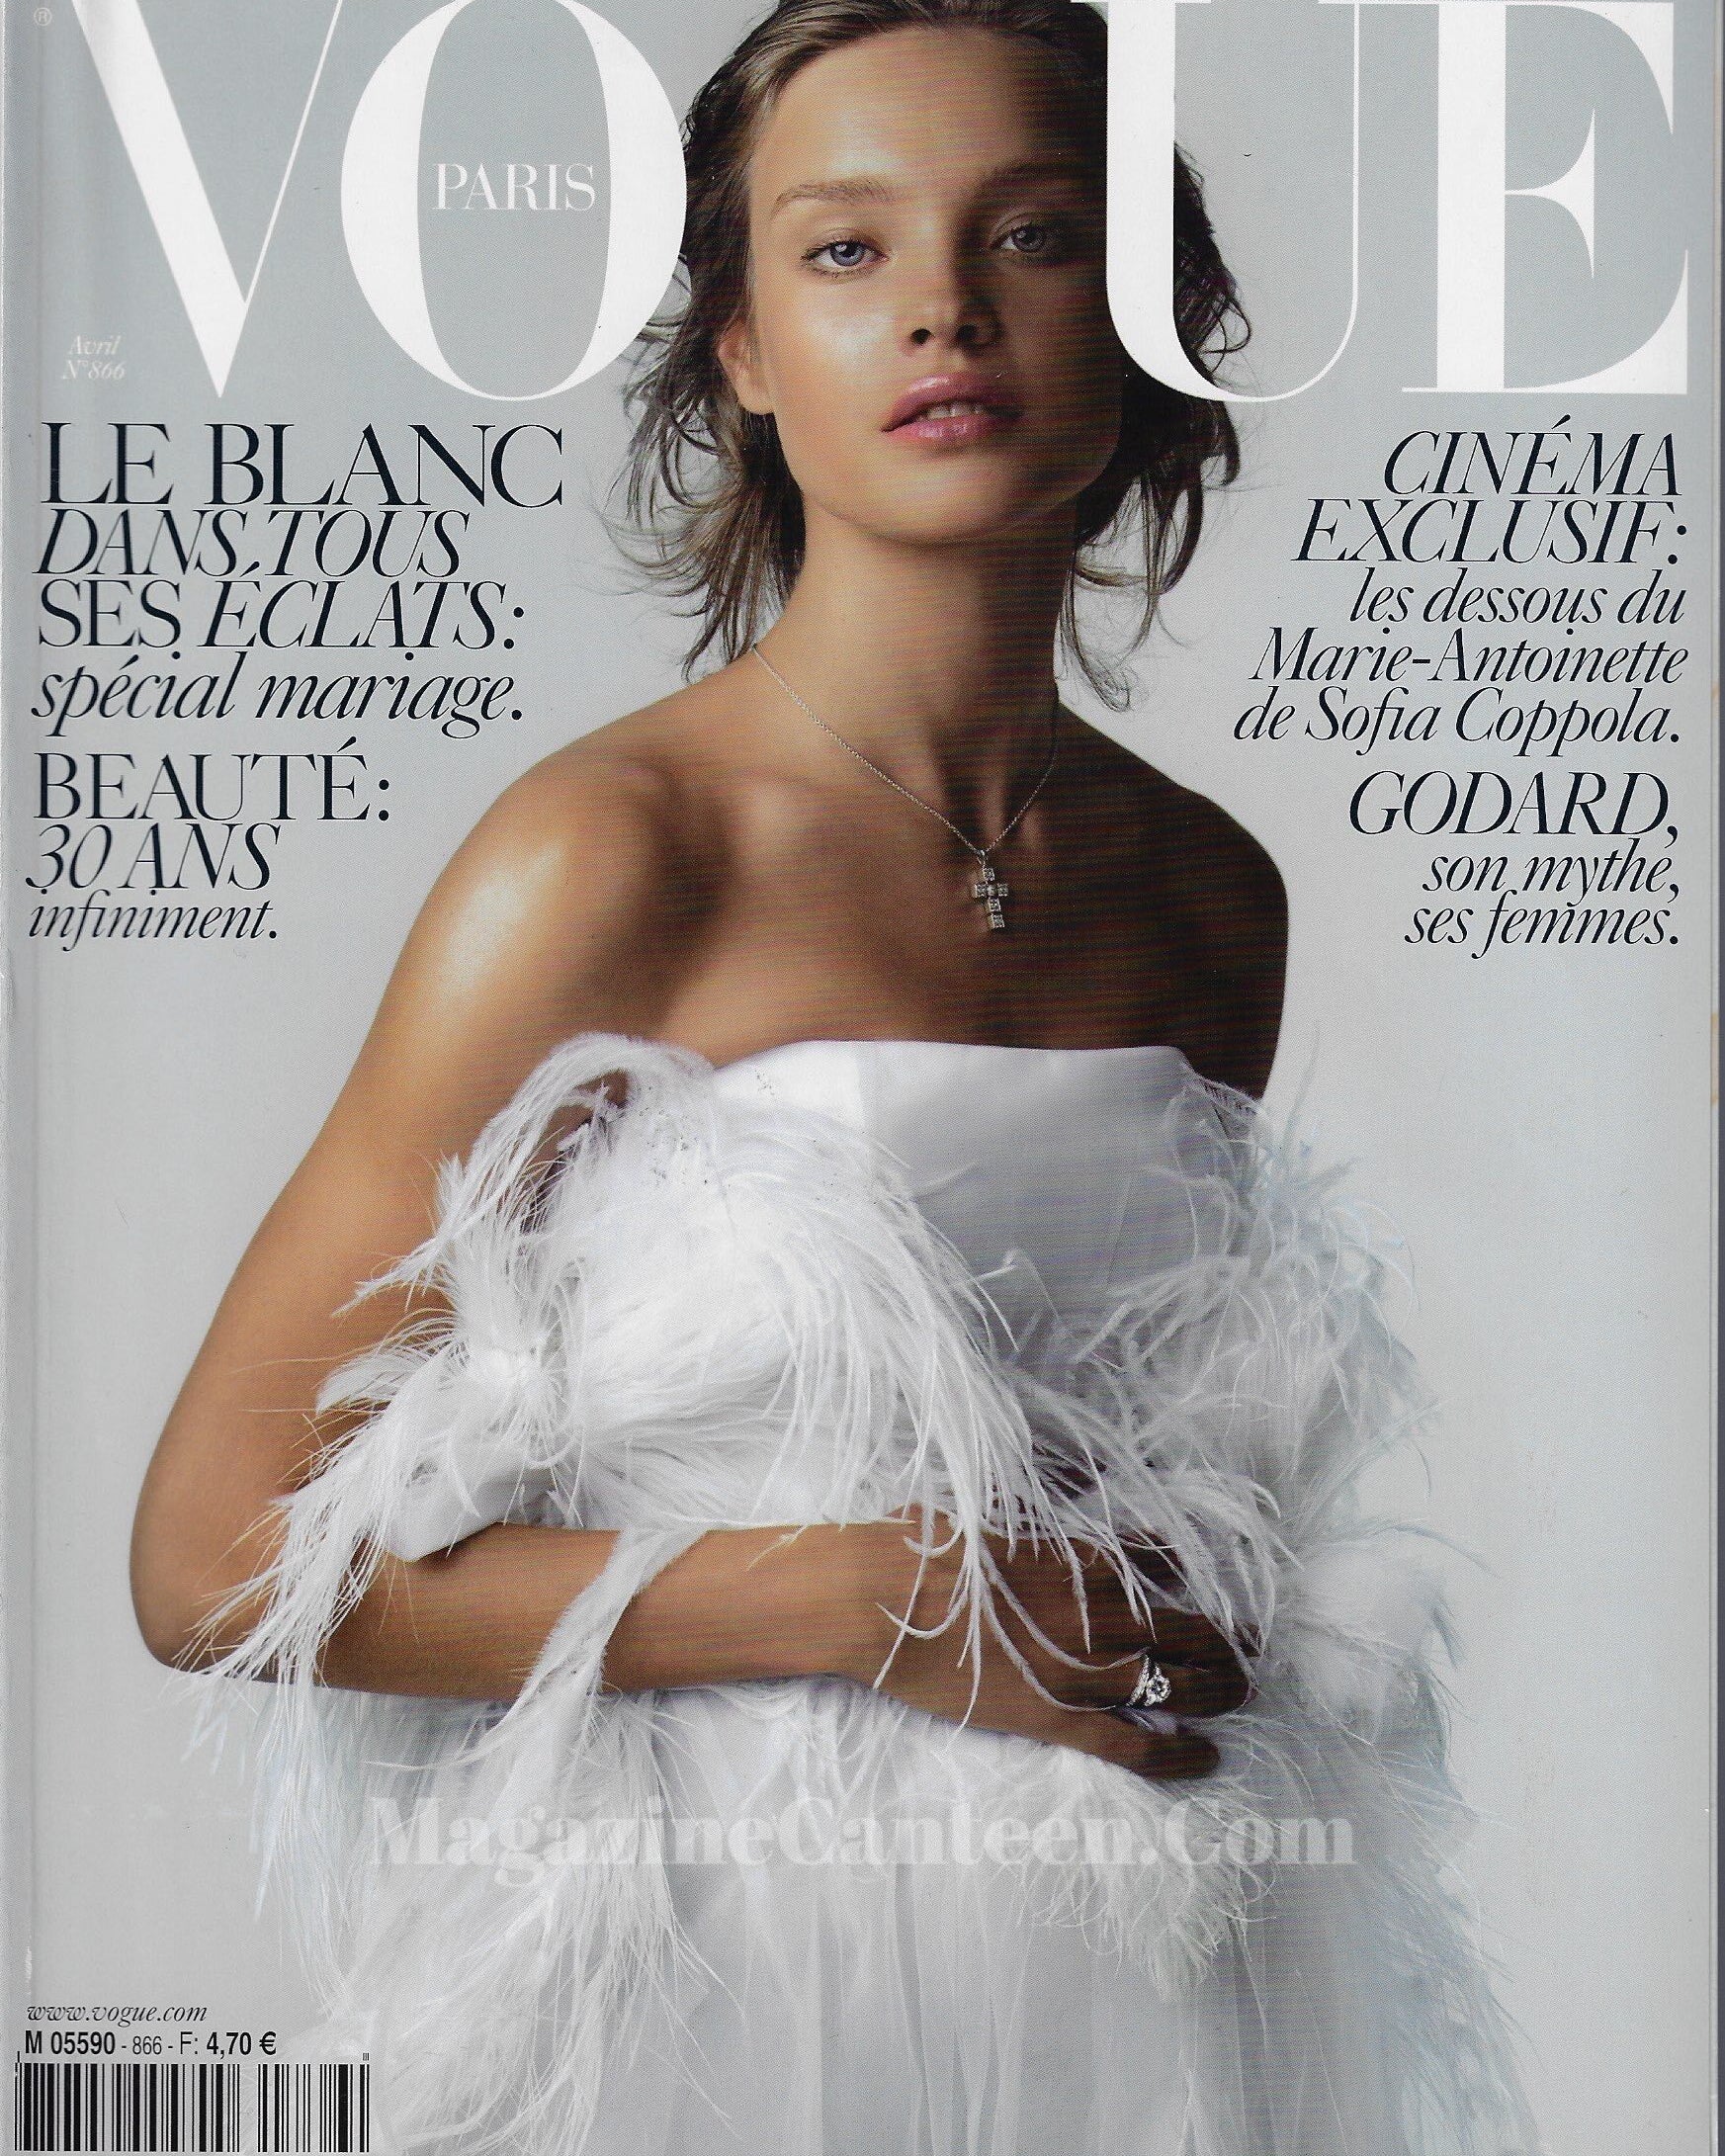 Vogue Paris Magazine 2006 - Natalia Vodianova